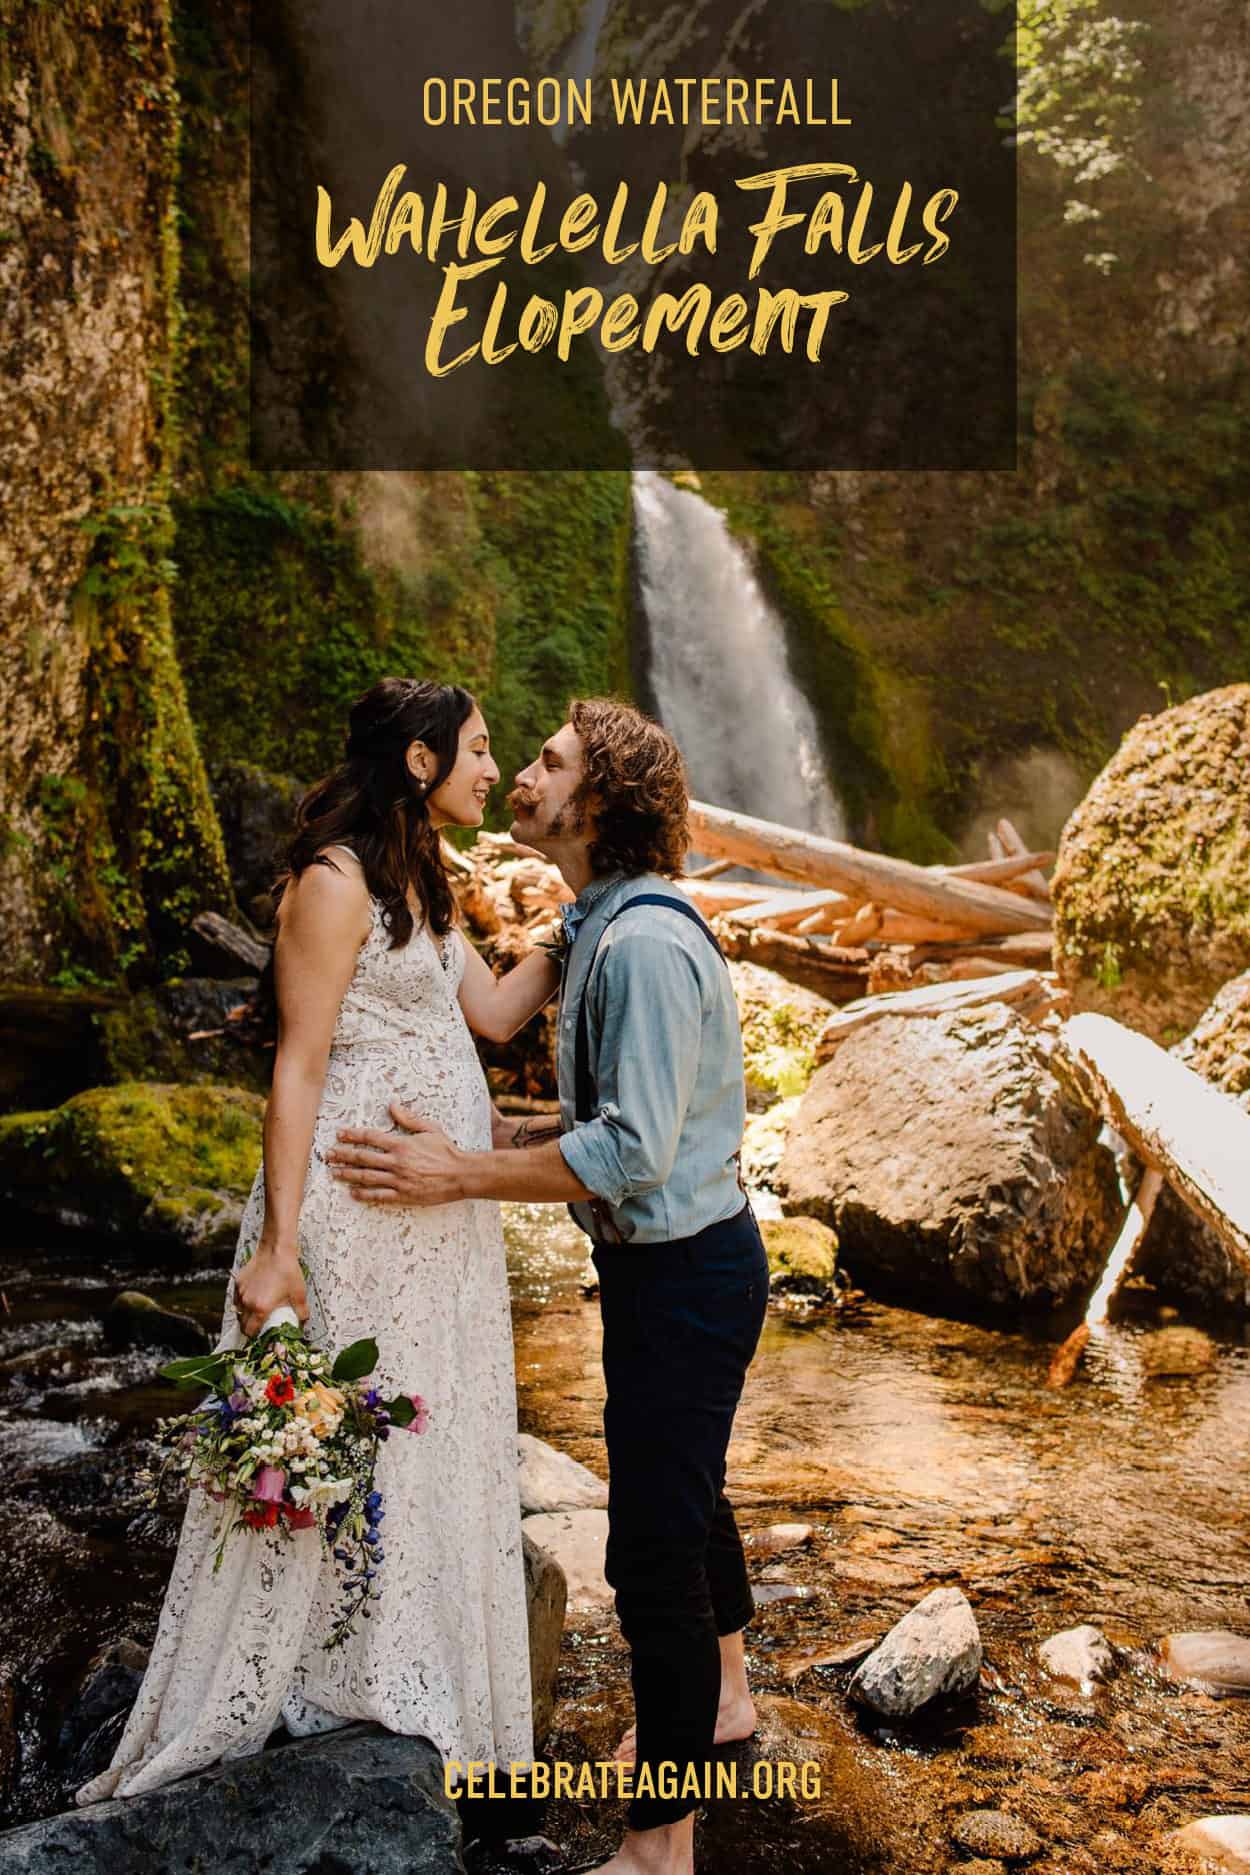 text that says " Oregon waterfall wahclella falls elopement" photo of bride and groom kissing in wahclella falls river